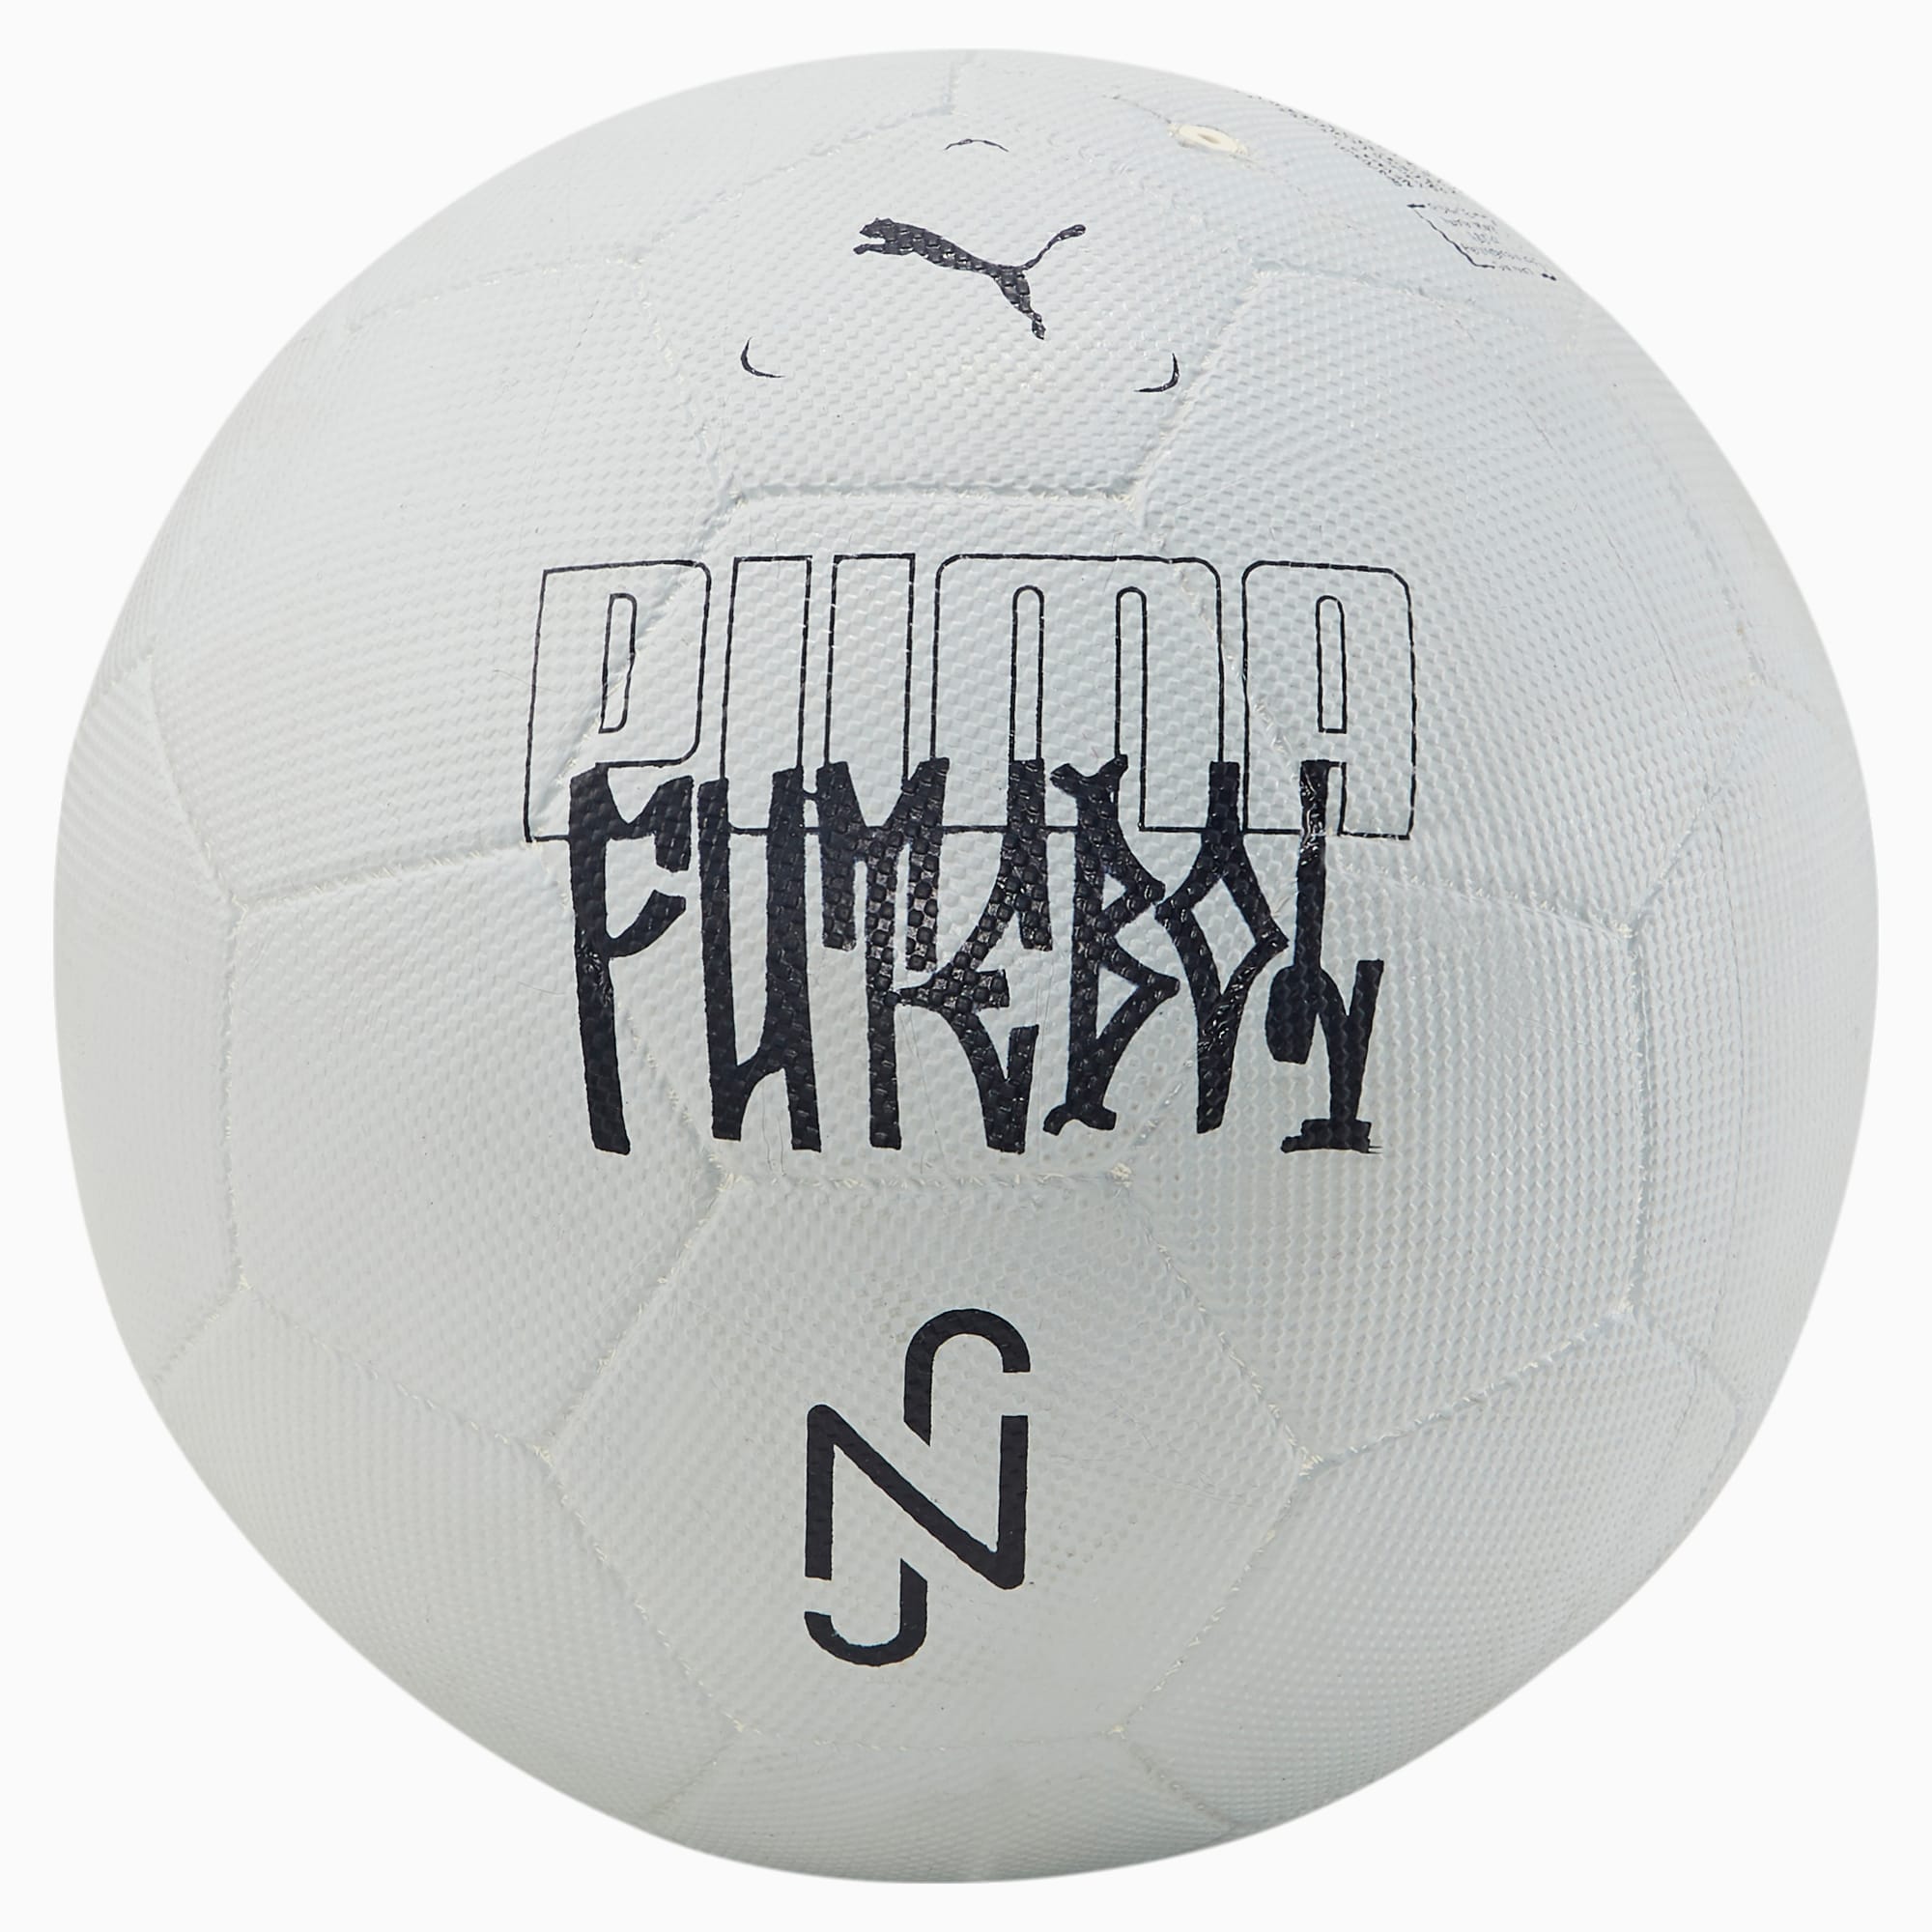 neymar jr soccer ball